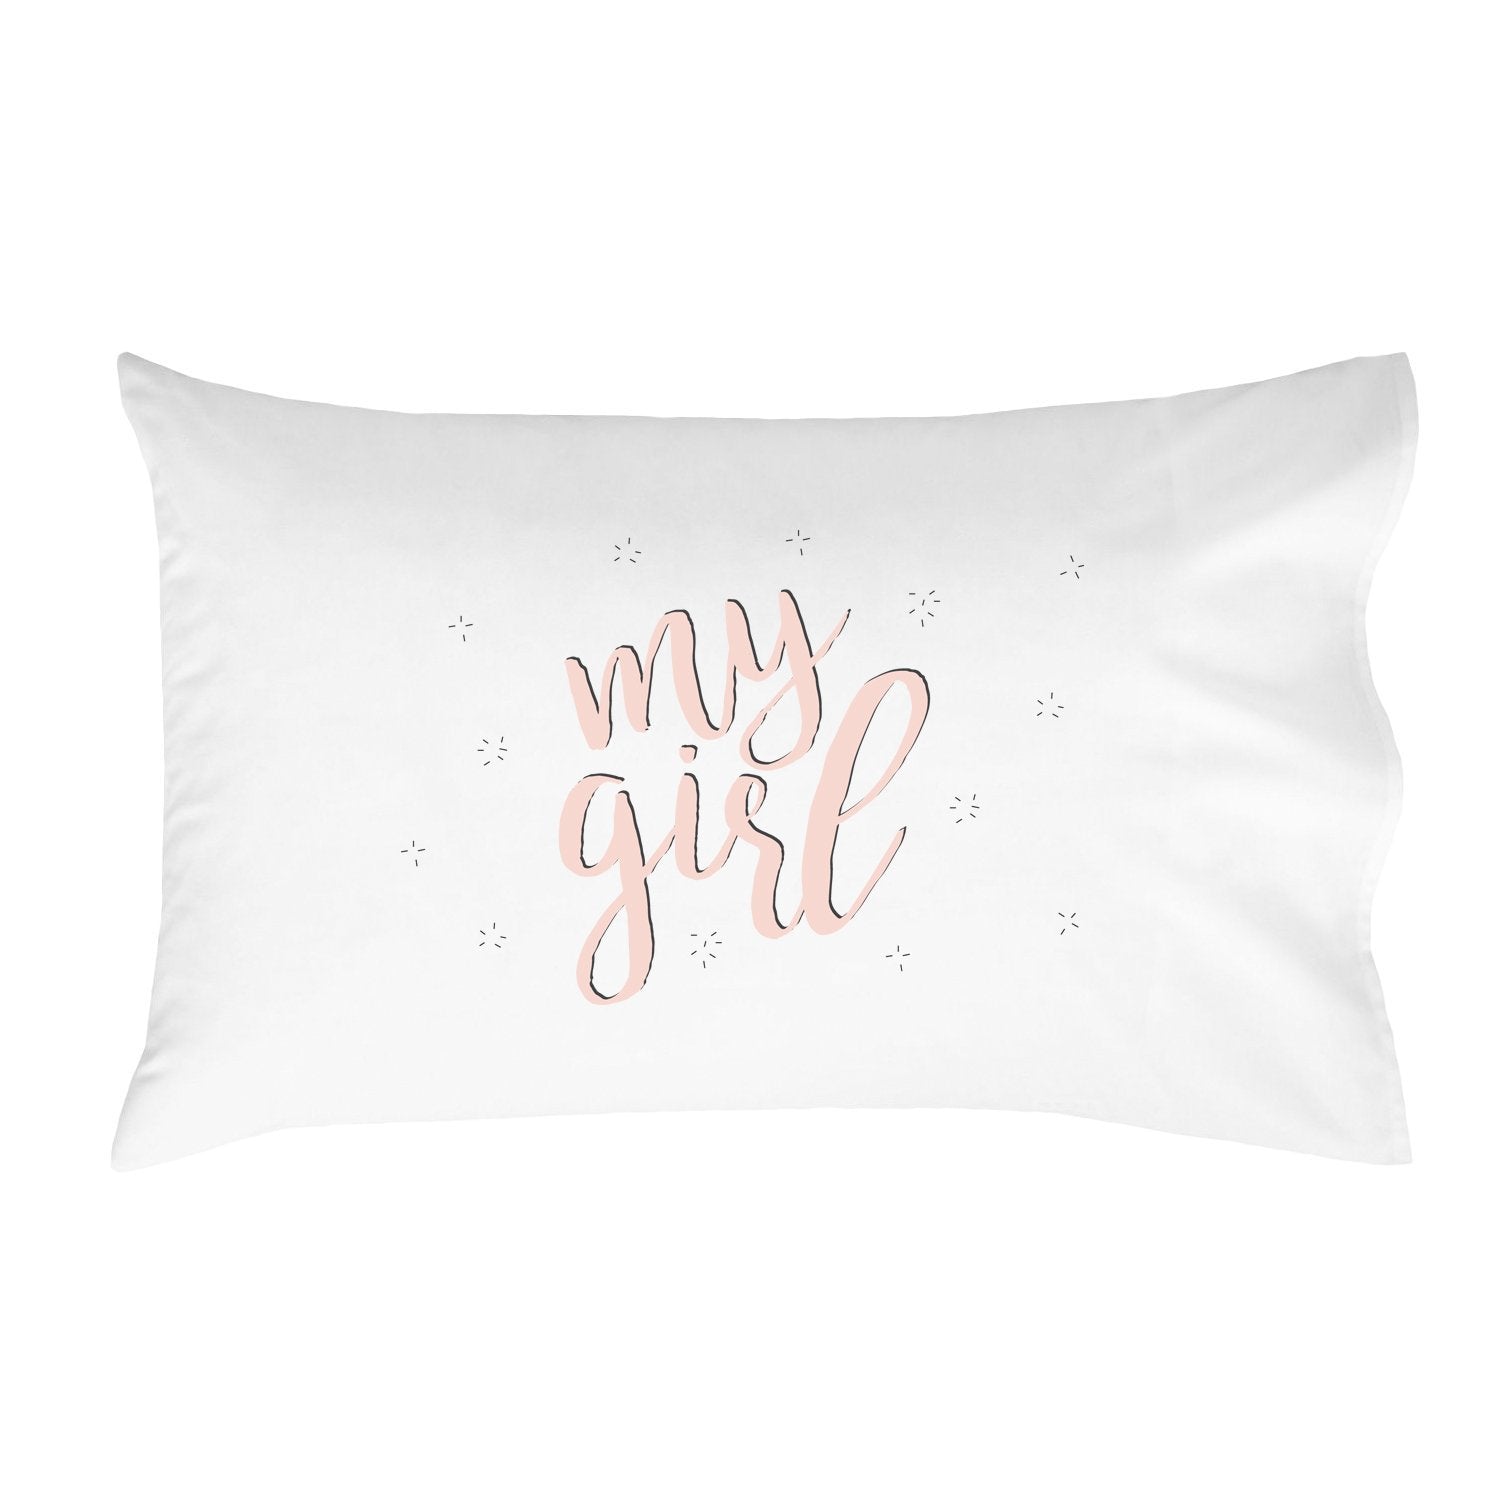 My Girl Pillowcase (One 20x30 Standard/Queen Size Pillow Case) Kids Room Decor Birthday Presents Girlfriend Gifts